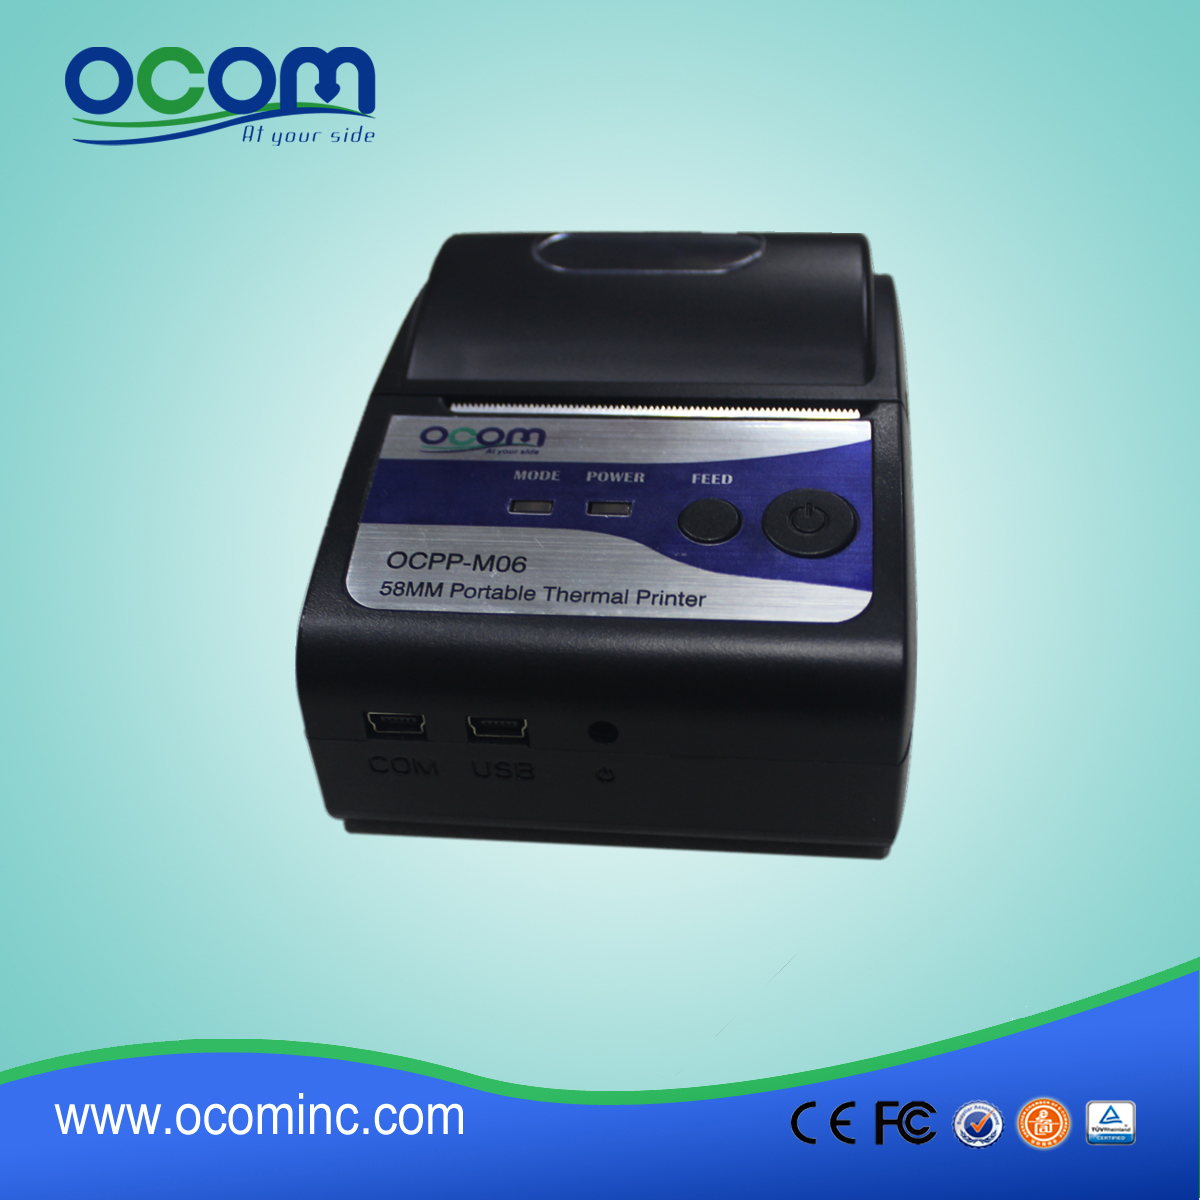 OCPP-M06便携式迷你热敏打印机为iPhone